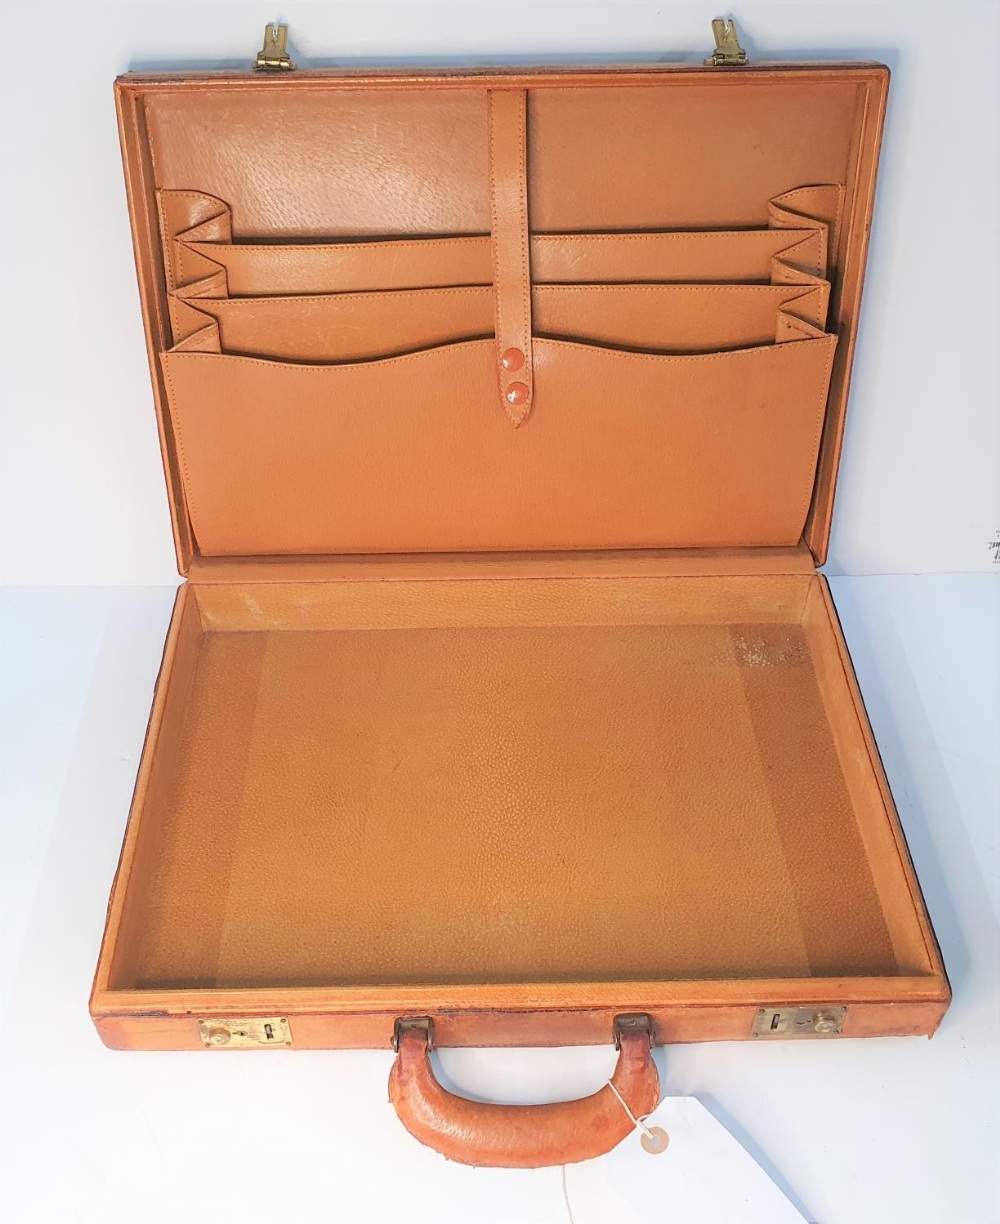 Vintage, tan coloured, slimline briefcase